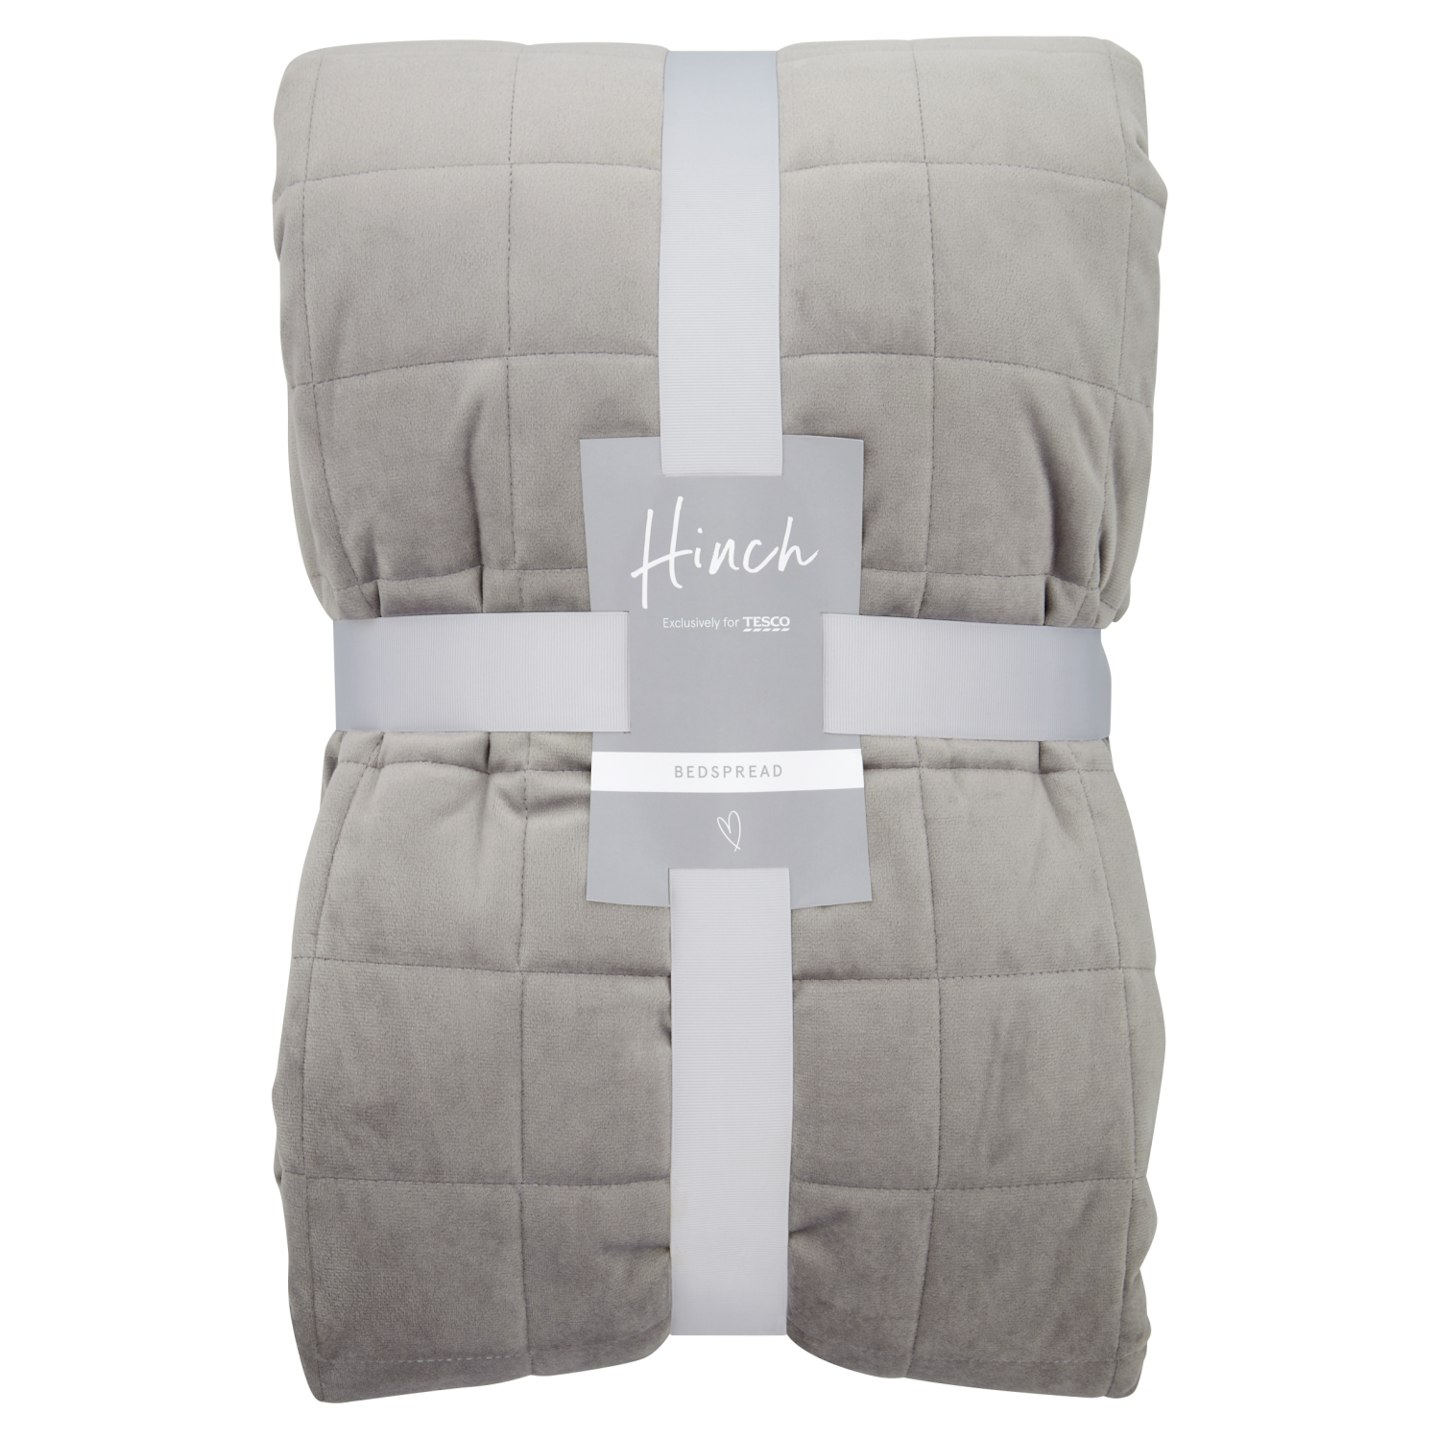 Hinch Grey Velvet Bedspread, £35